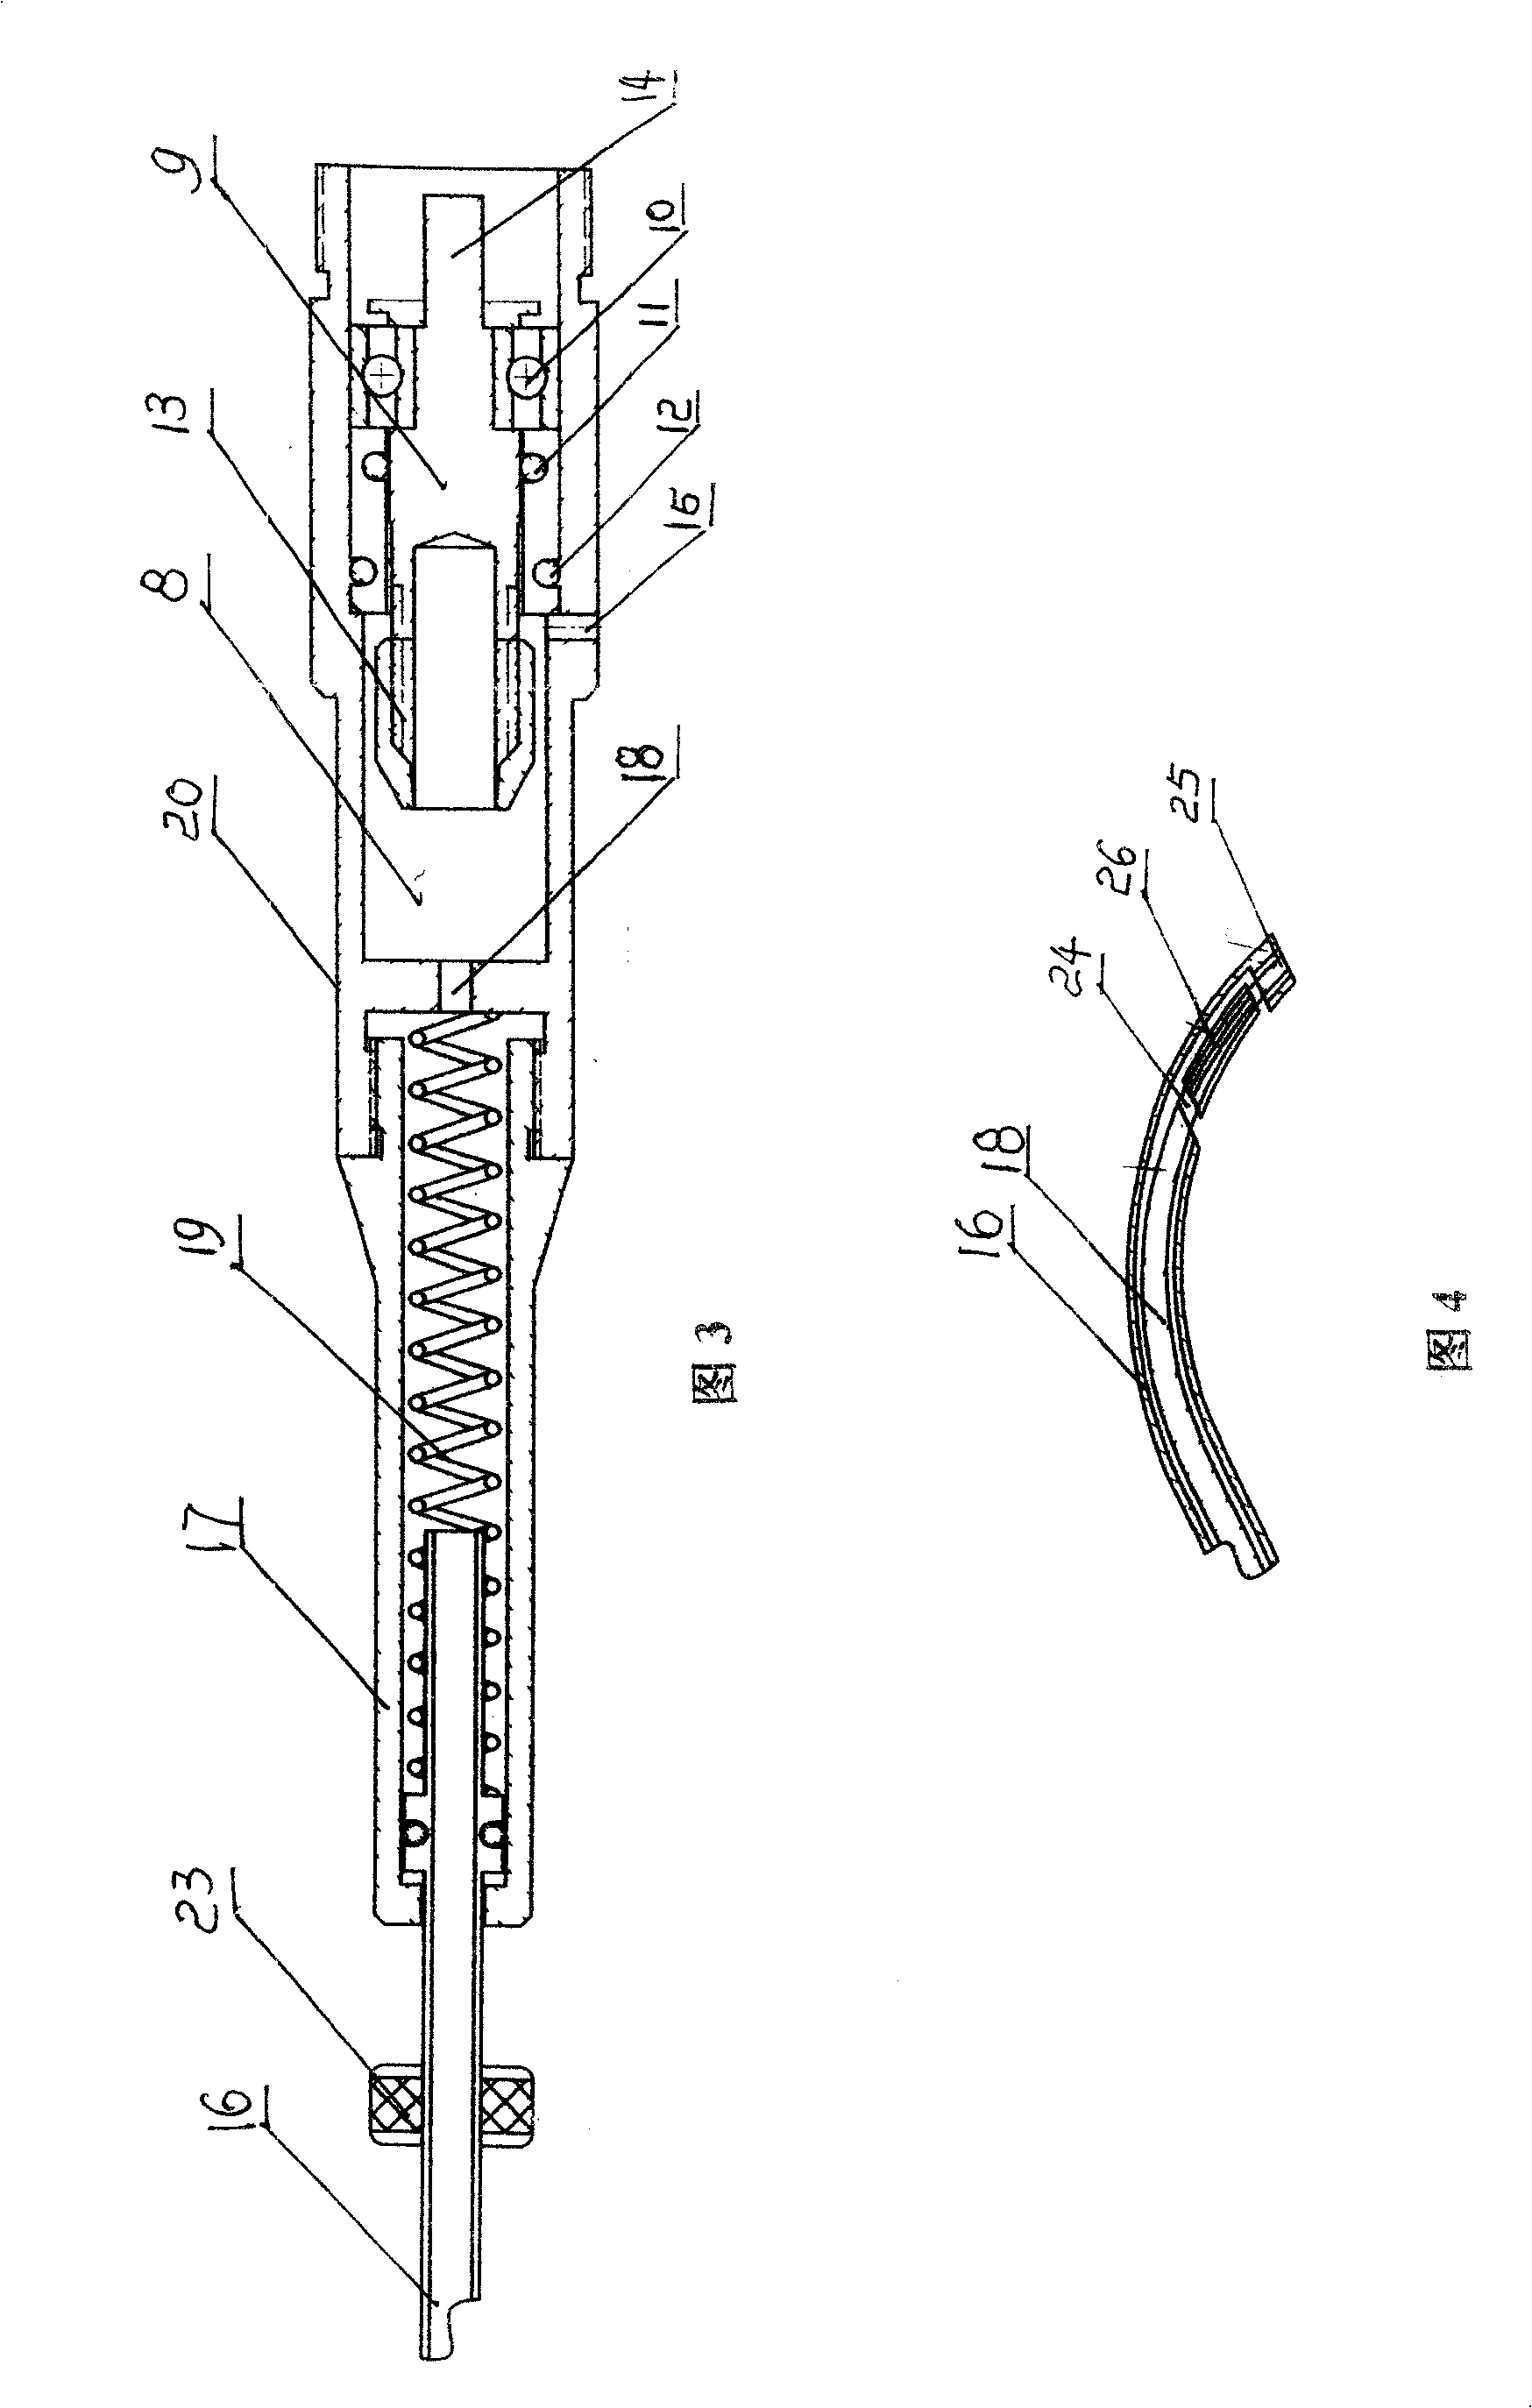 Multi-core flexible-shaft drill for plastic surgery